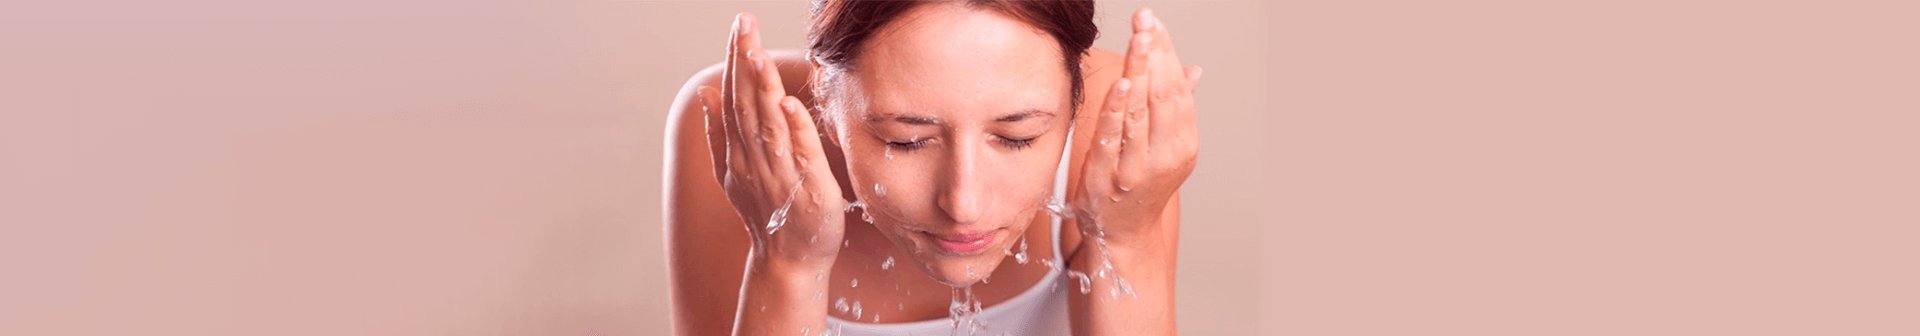 hidratação pele oleosa